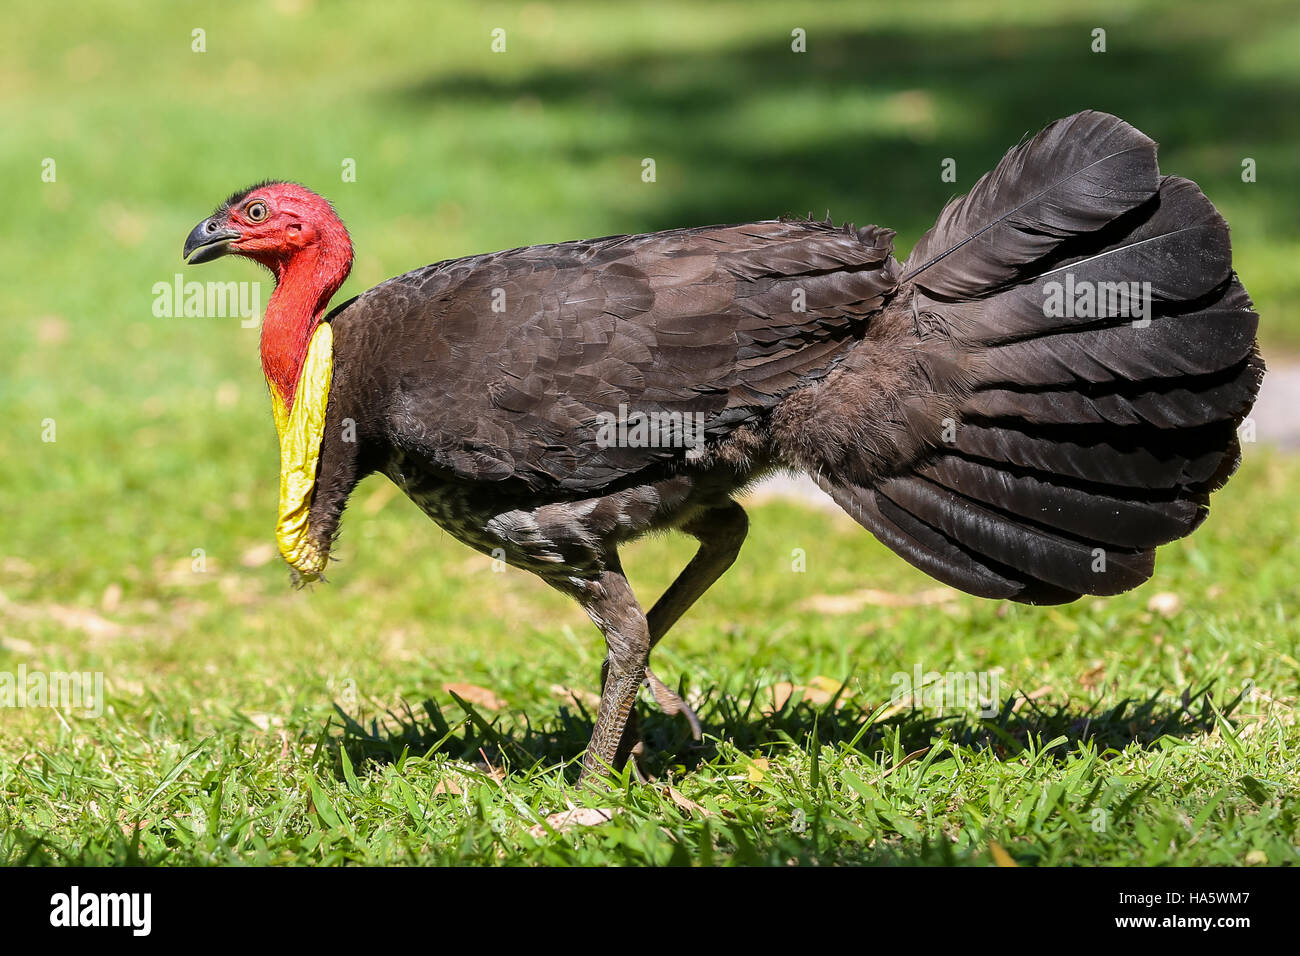 Bush turkey australia hi-res stock photography and images - Alamy